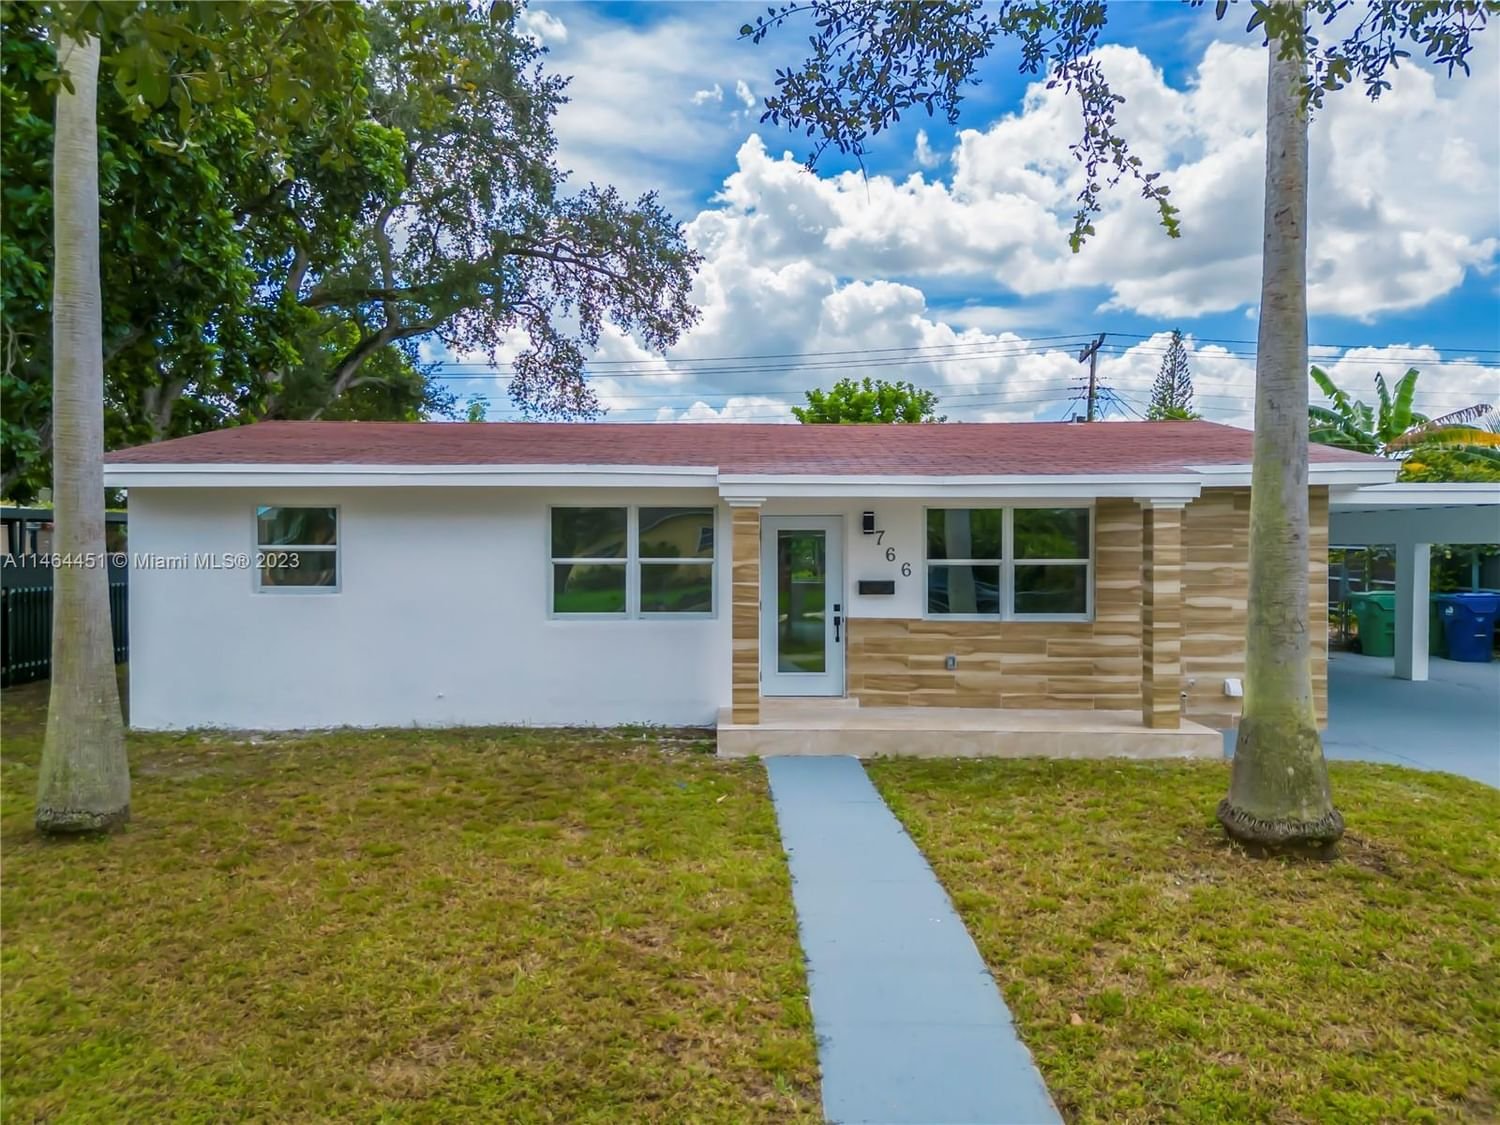 Real estate property located at 766 200th St, Miami-Dade County, Miami Gardens, FL